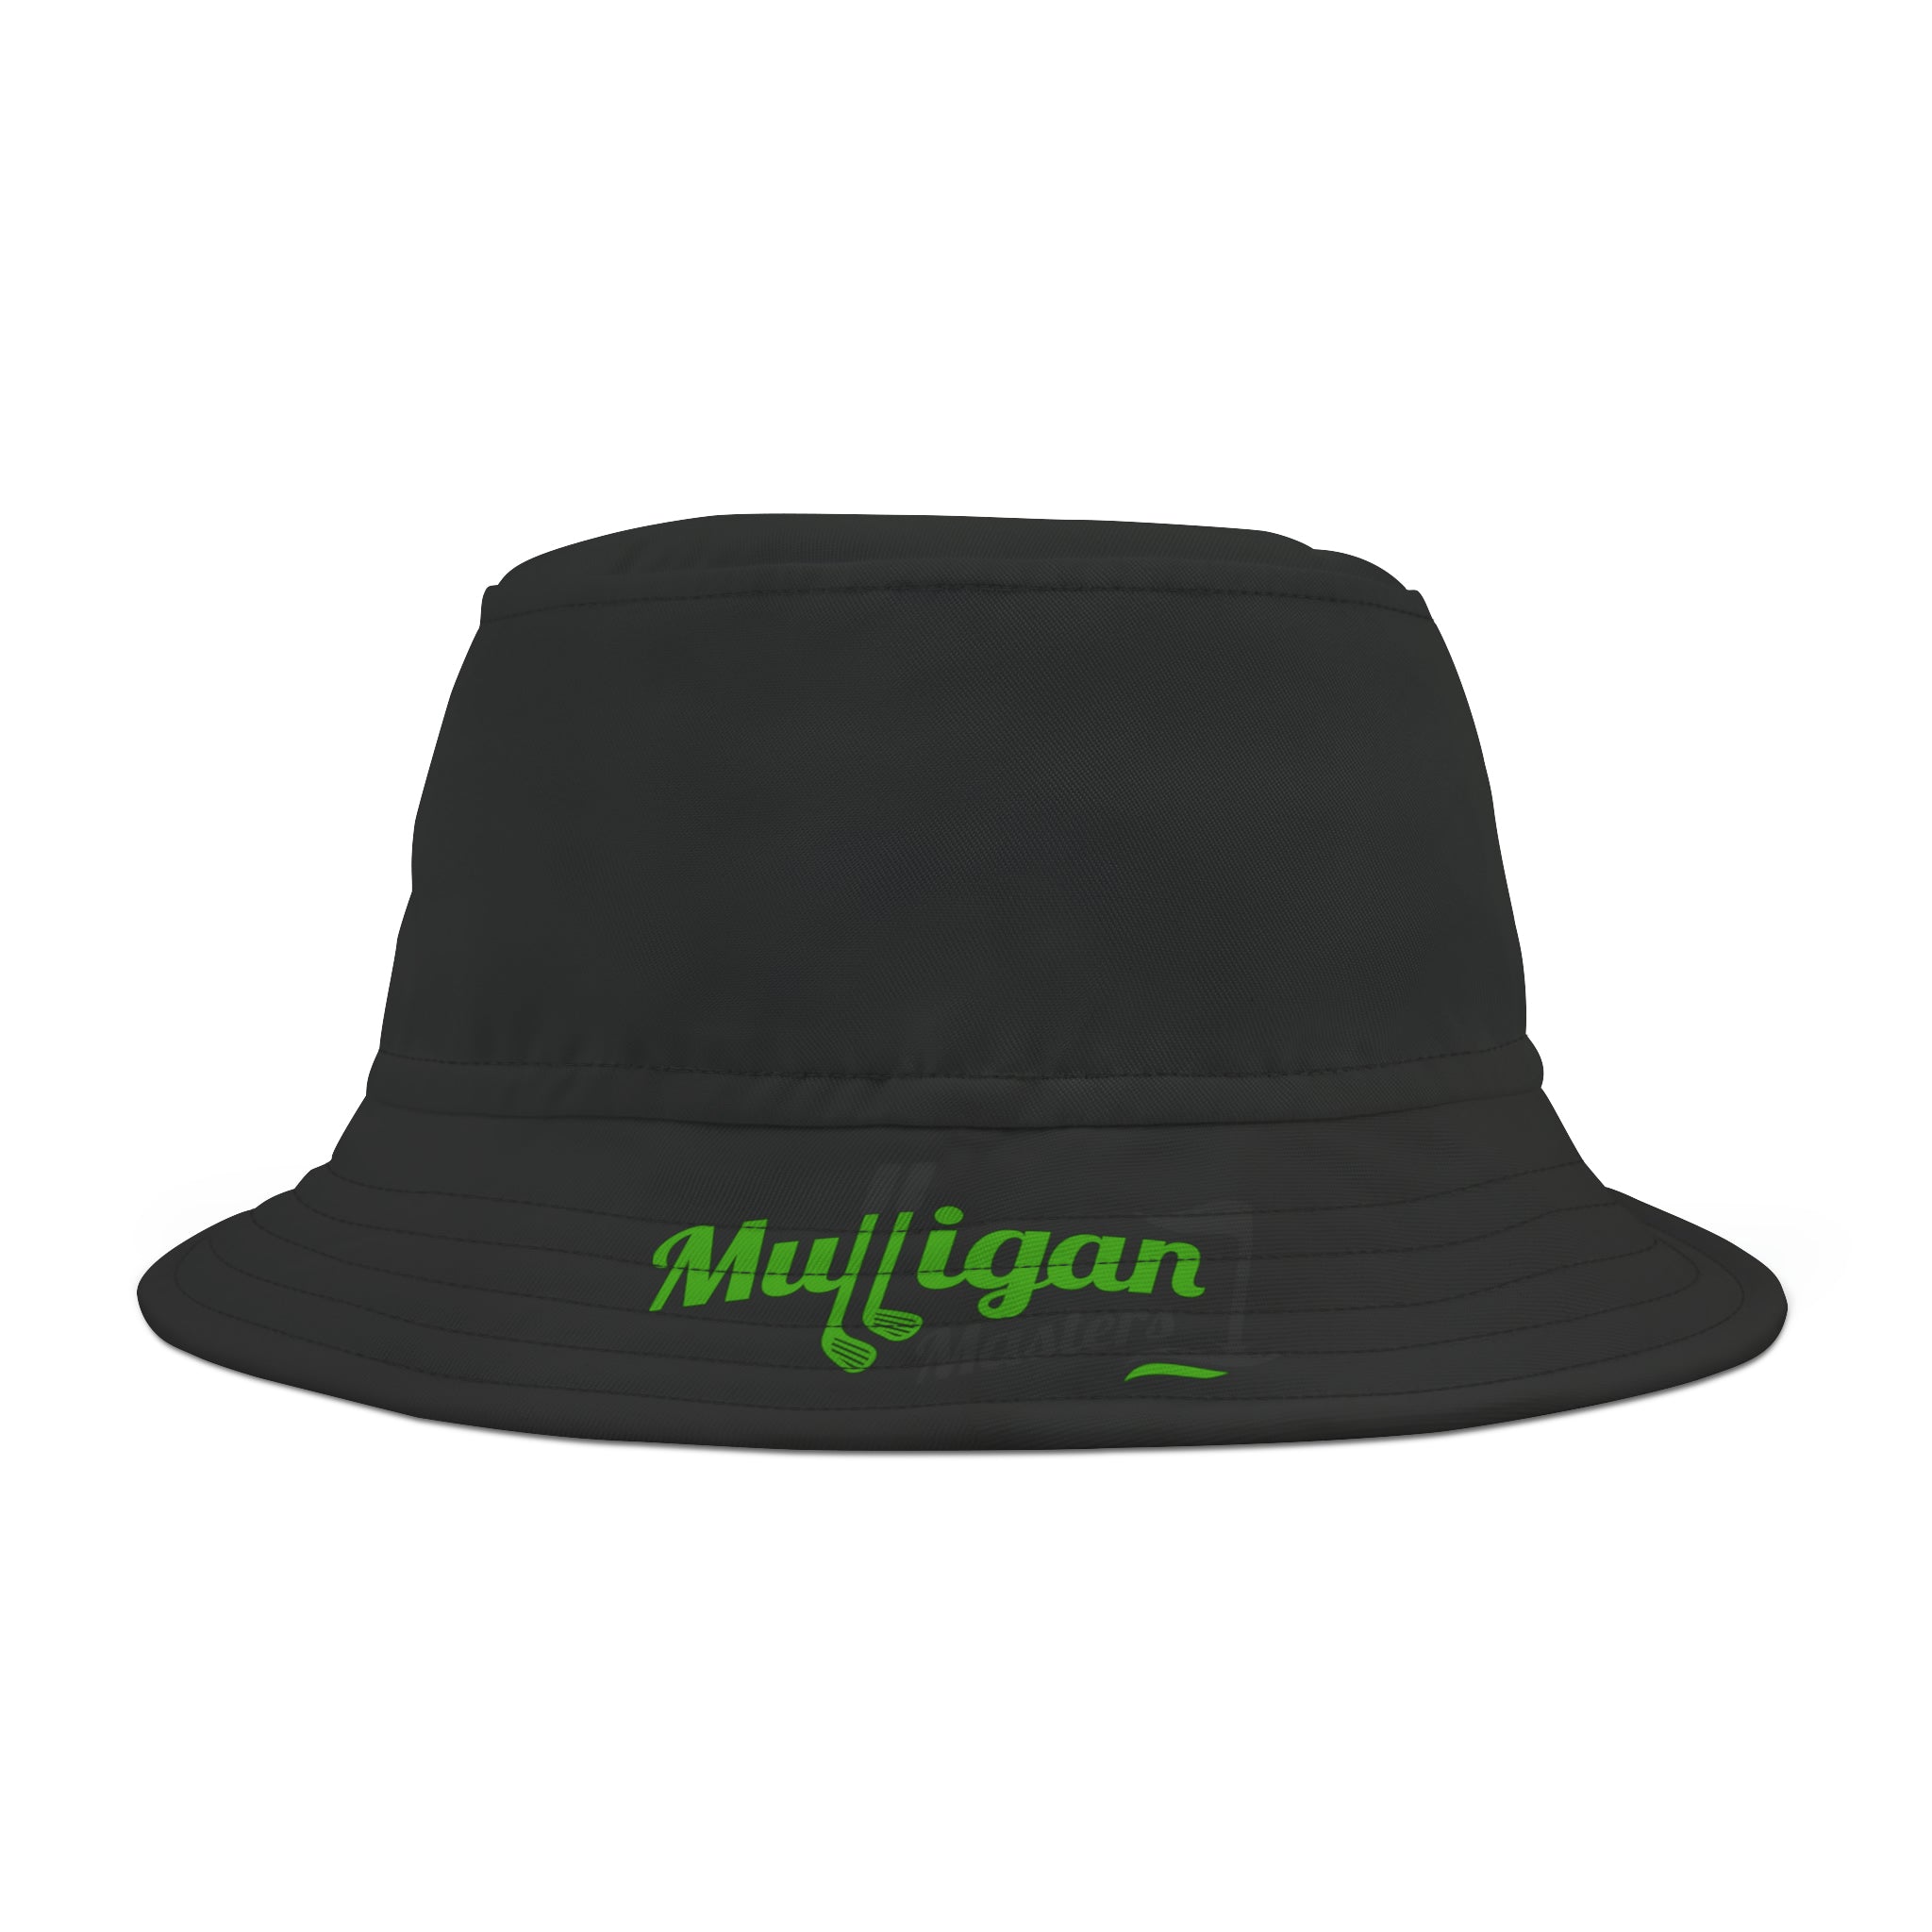 Mulligan Masters Bucket Hat